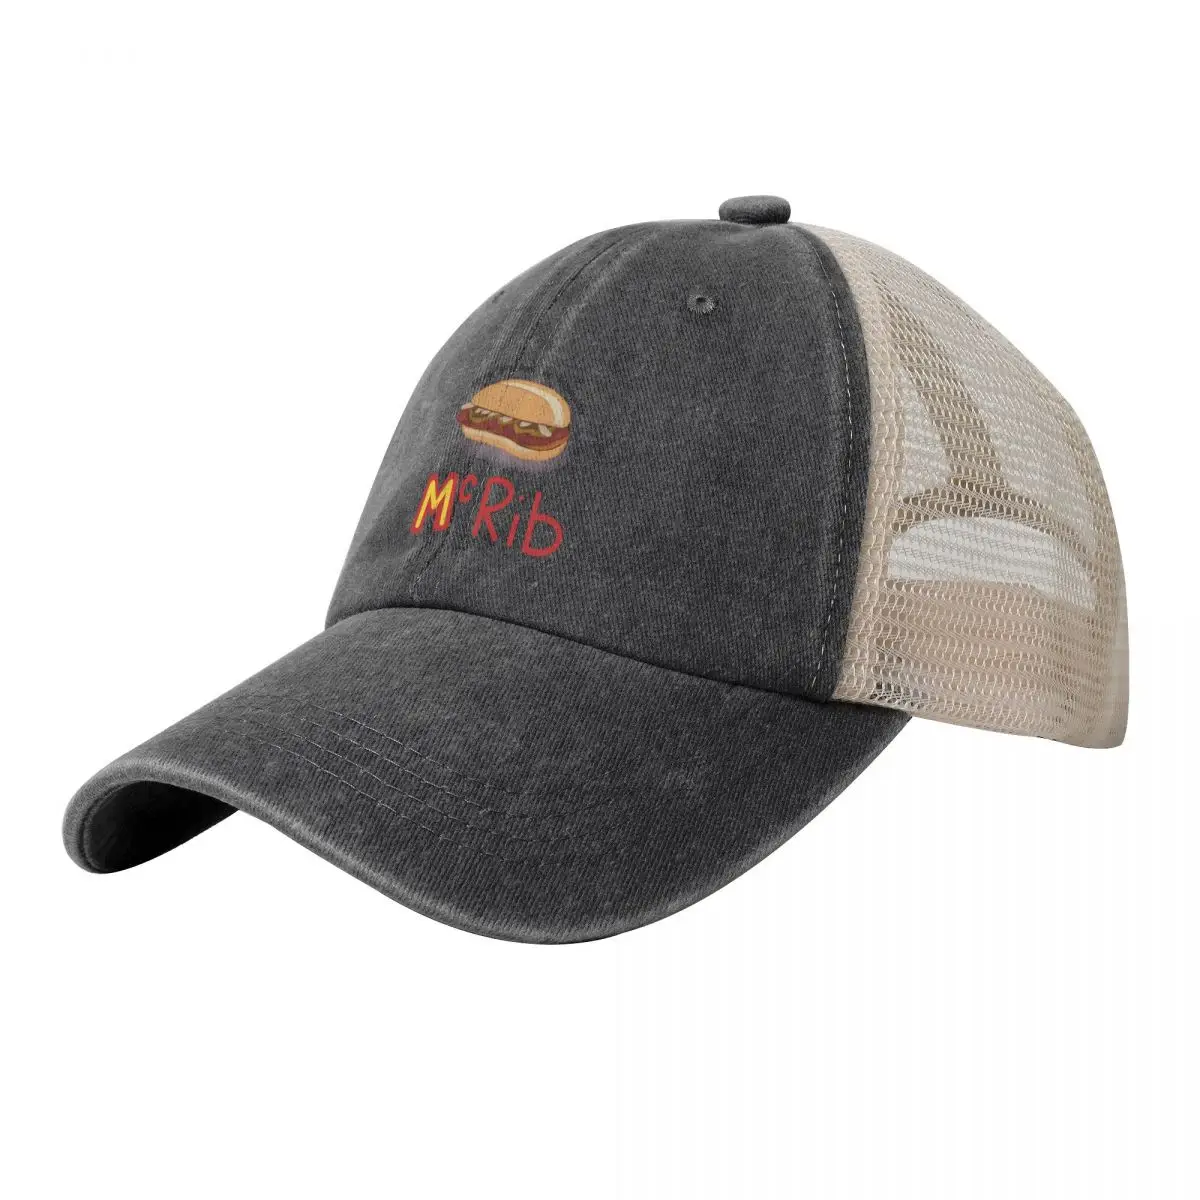 

McRib Cowboy Mesh Baseball Cap beach hat Hat Man Luxury Military Cap Man Hat Man For The Sun Baseball For Men Women's